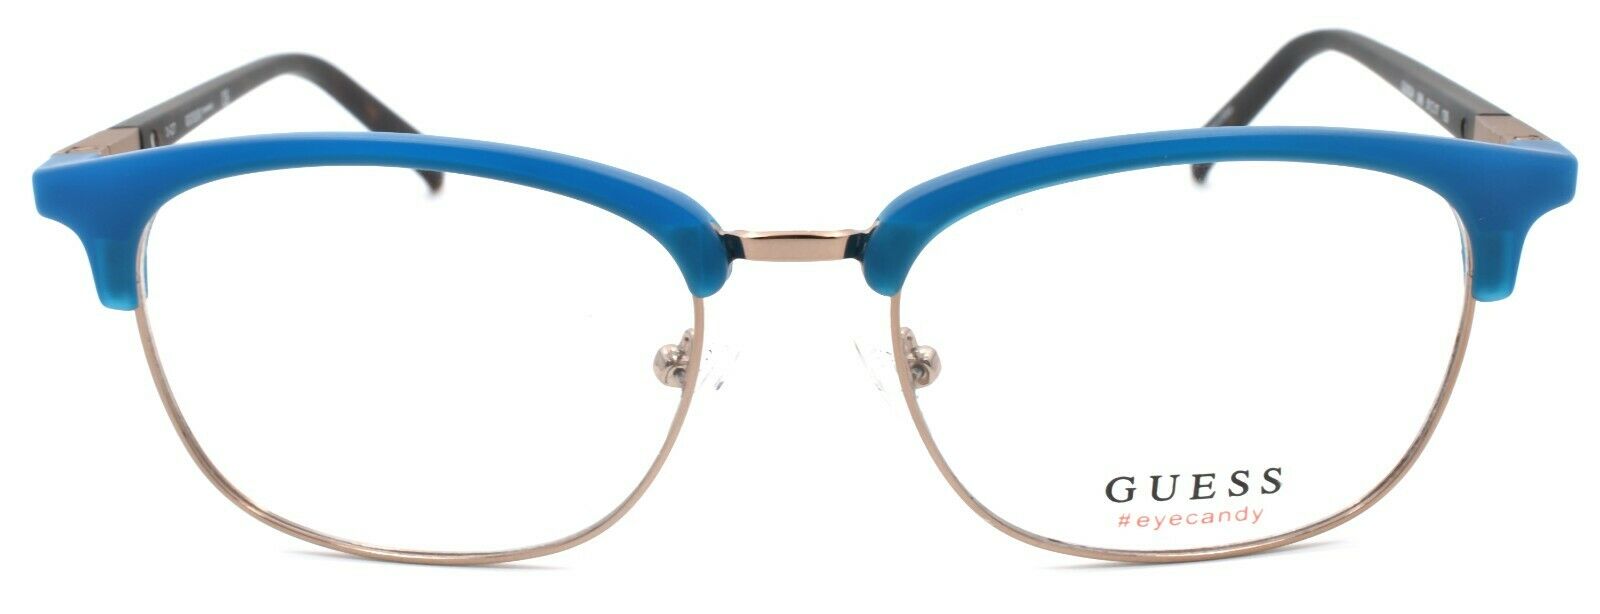 2-GUESS GU3024 088 Eye Candy Women's Eyeglasses Frames 51-17-135 Matte Turquoise-664689924622-IKSpecs